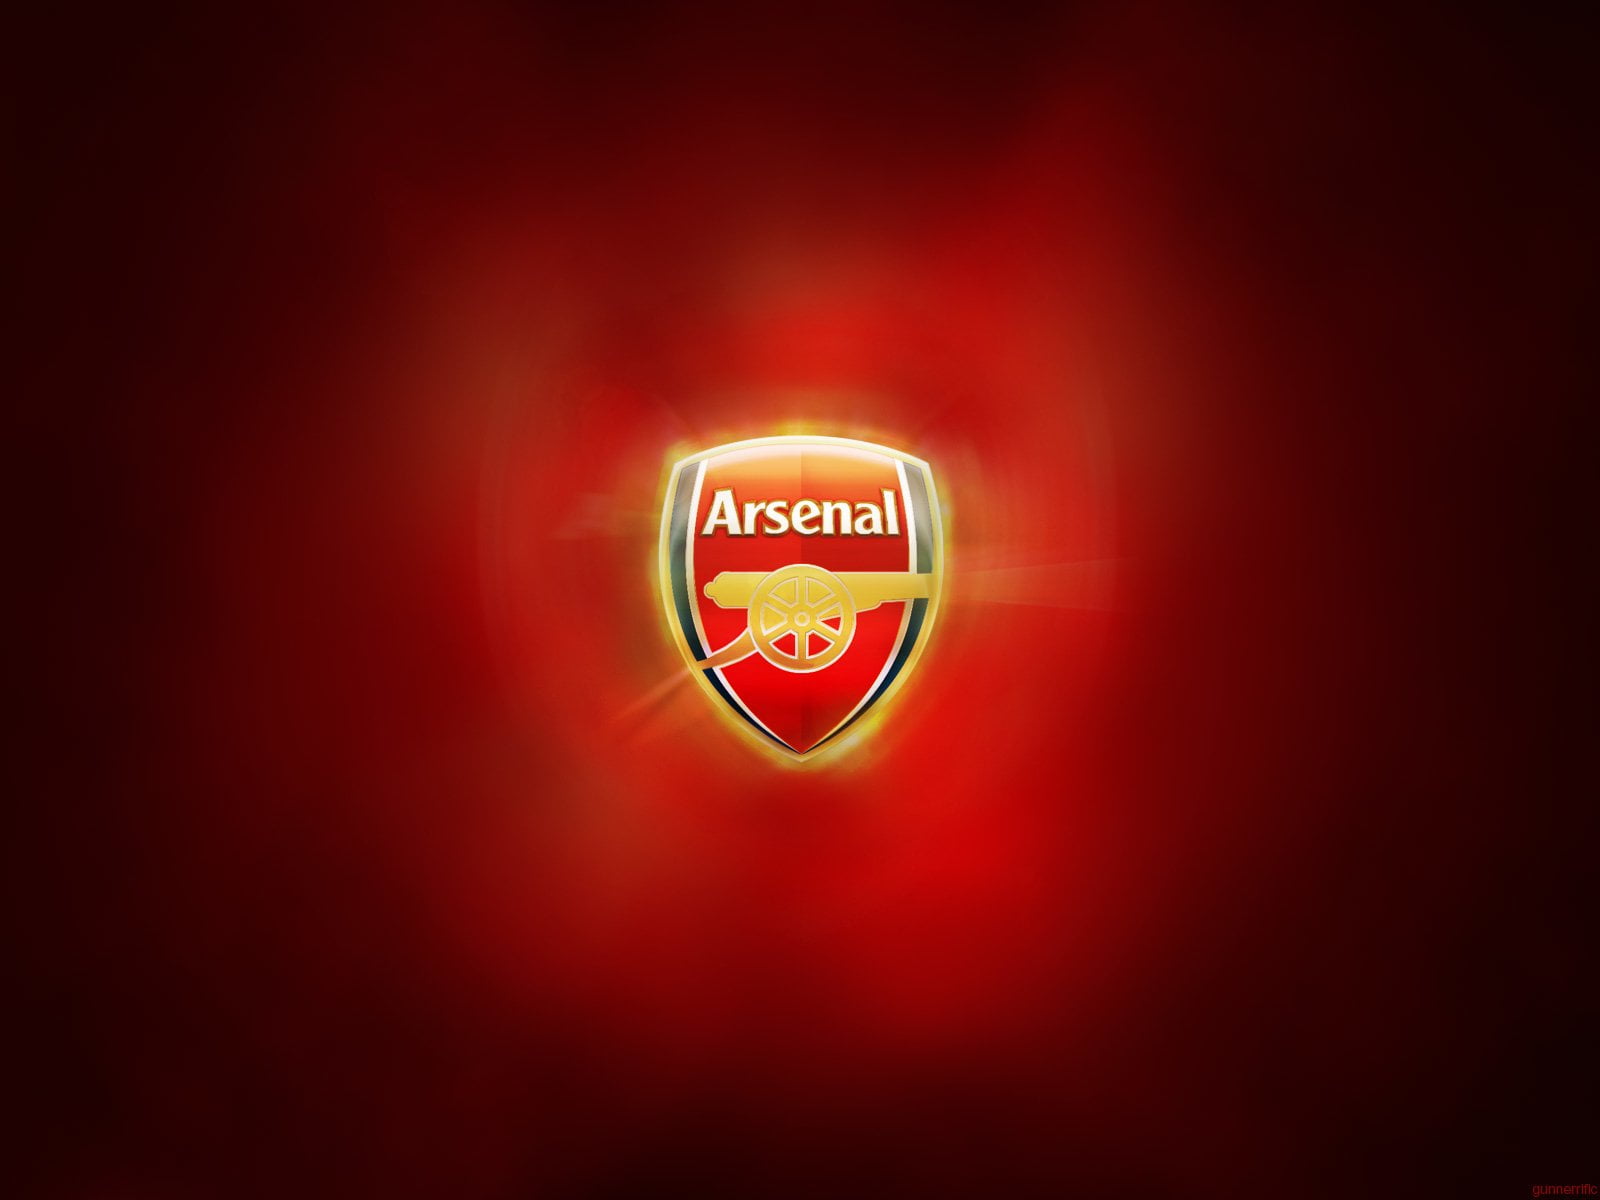 Arsenal logo, Soccer, Arsenal F.C., red, text, illuminated, single object